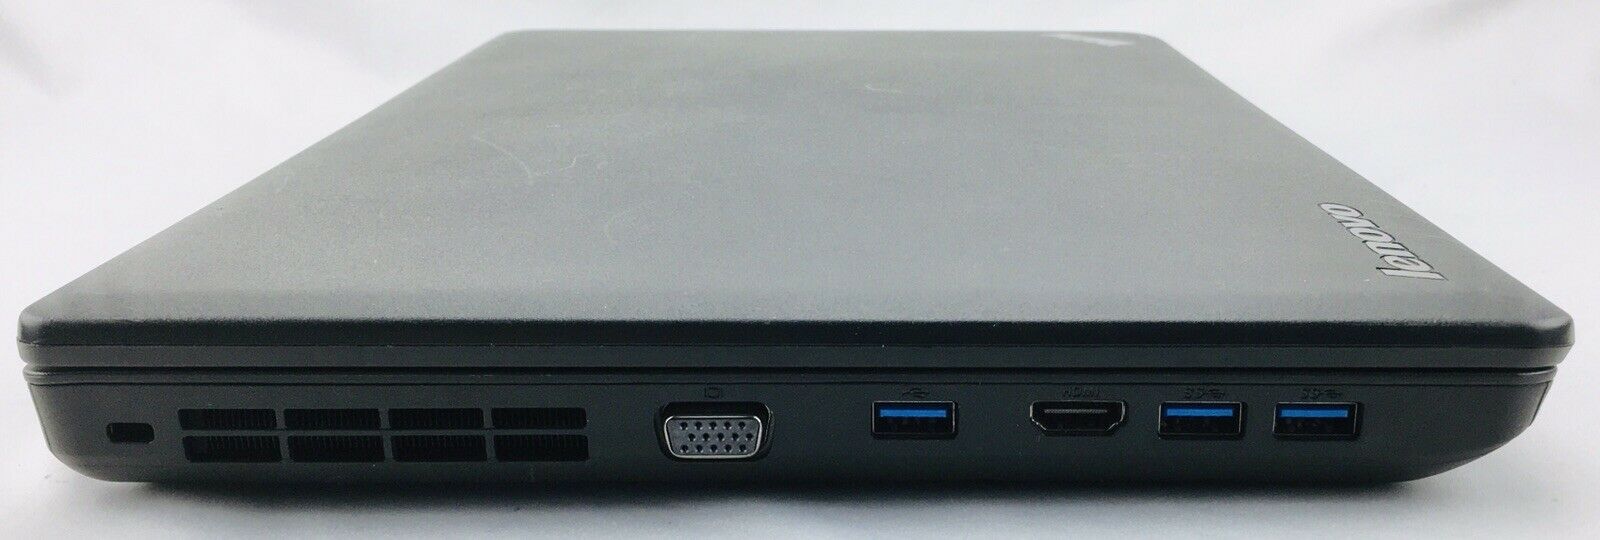 Lenovo ThinkPad Edge E530c Laptop Computer Intel Core i3 2.2GHz 4GB 250GB HDMI